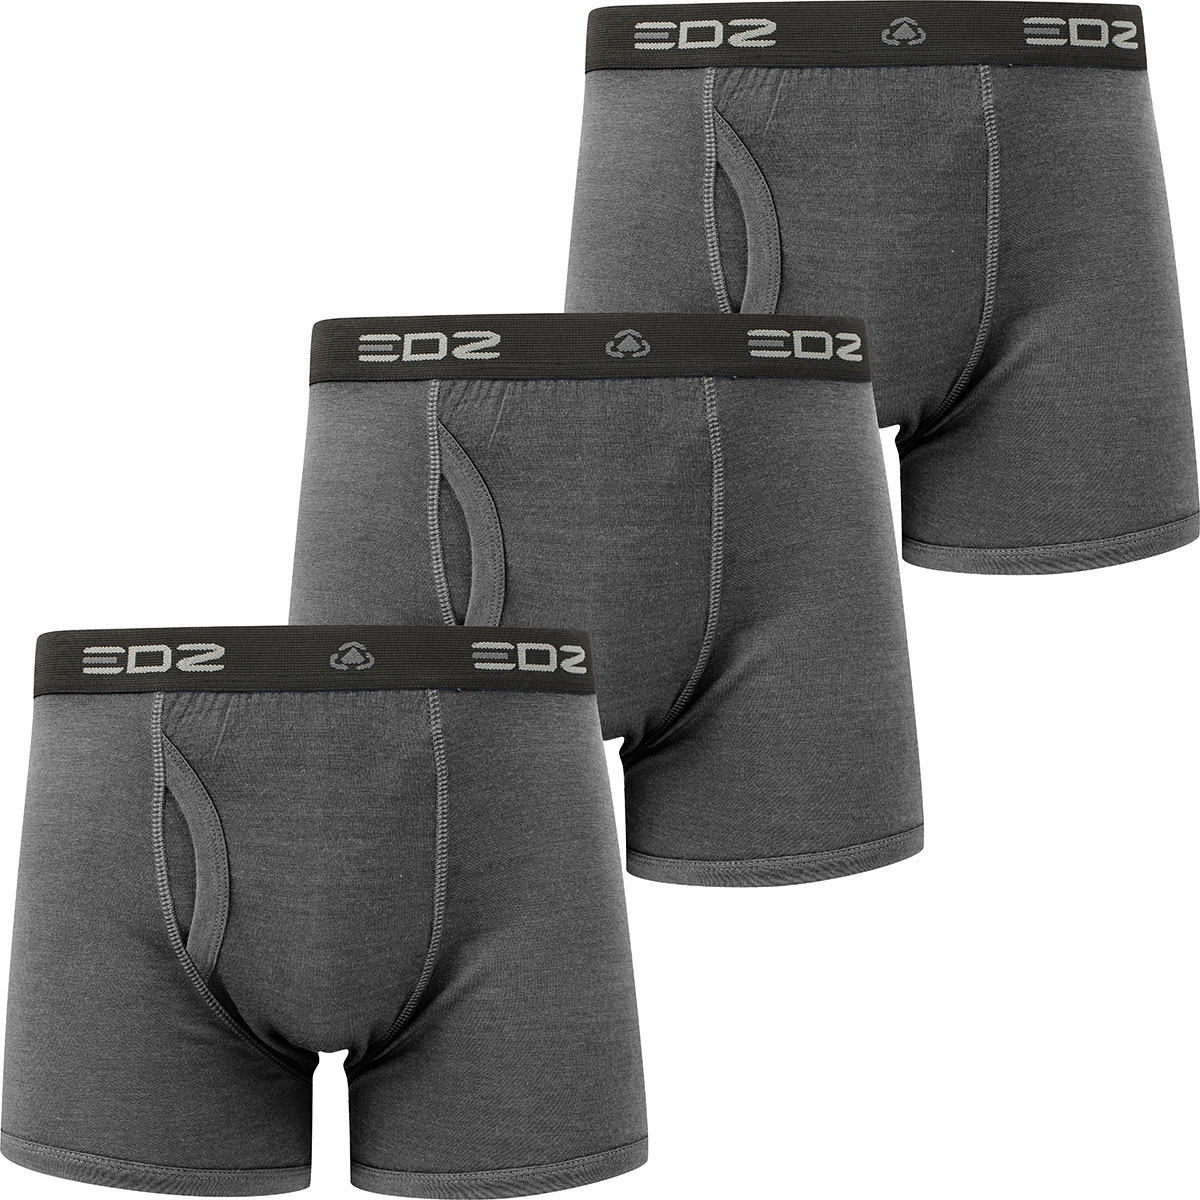 EDZ Merino Wool Boxer Shorts Trunk Underwear Mens Black (3 pack)